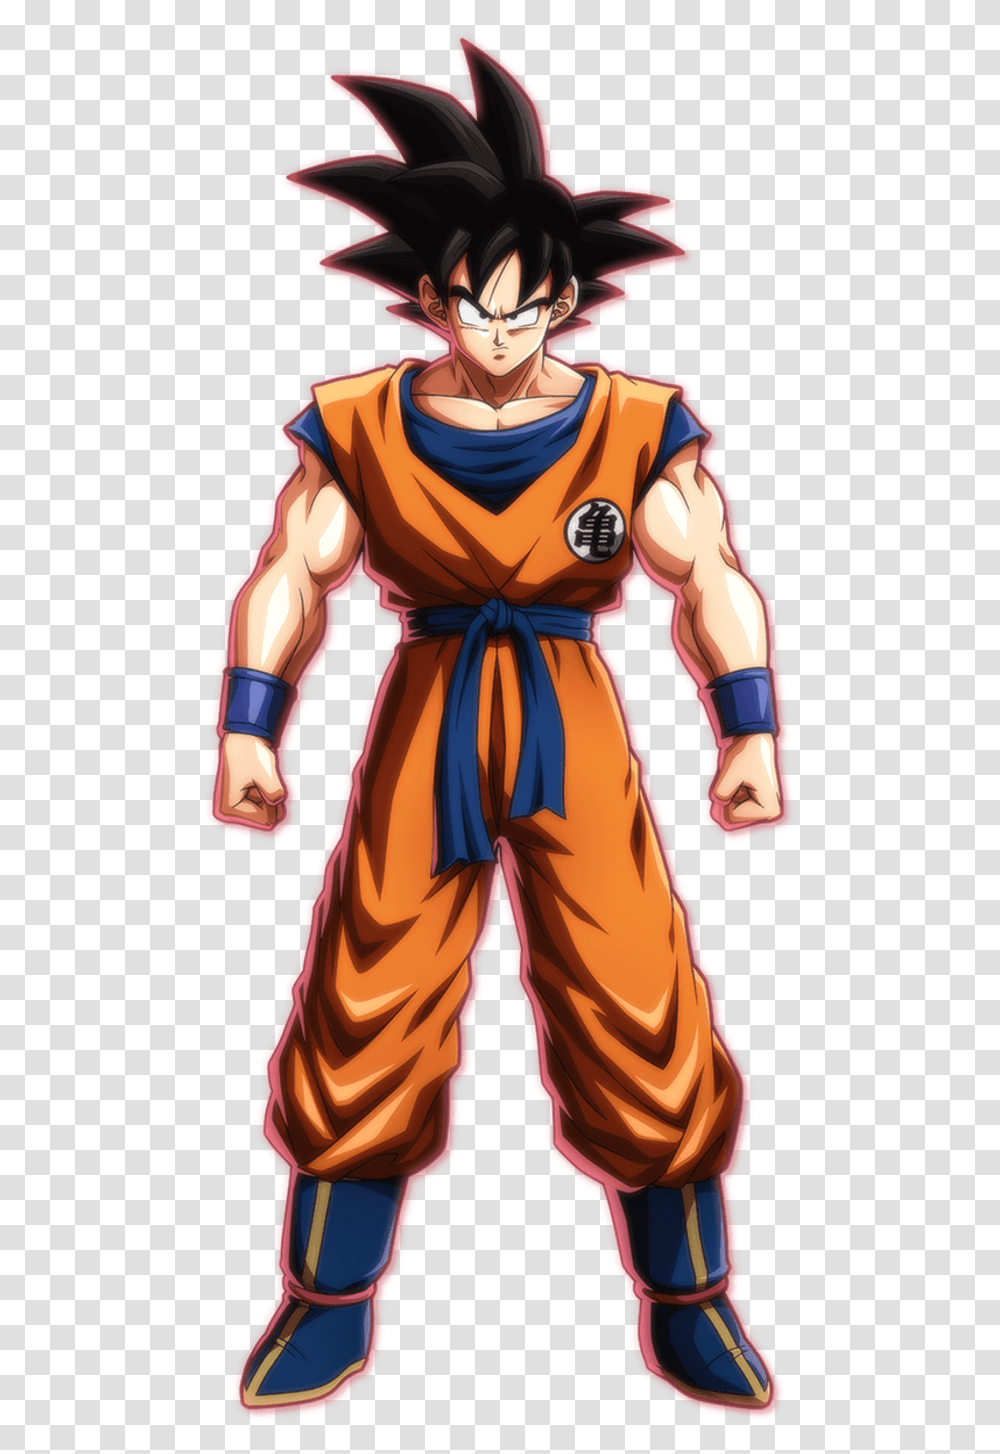 Dbfz Goku Portrait Dragon Ball Fighterz Base Goku, Person, Hand, Costume, Sport Transparent Png